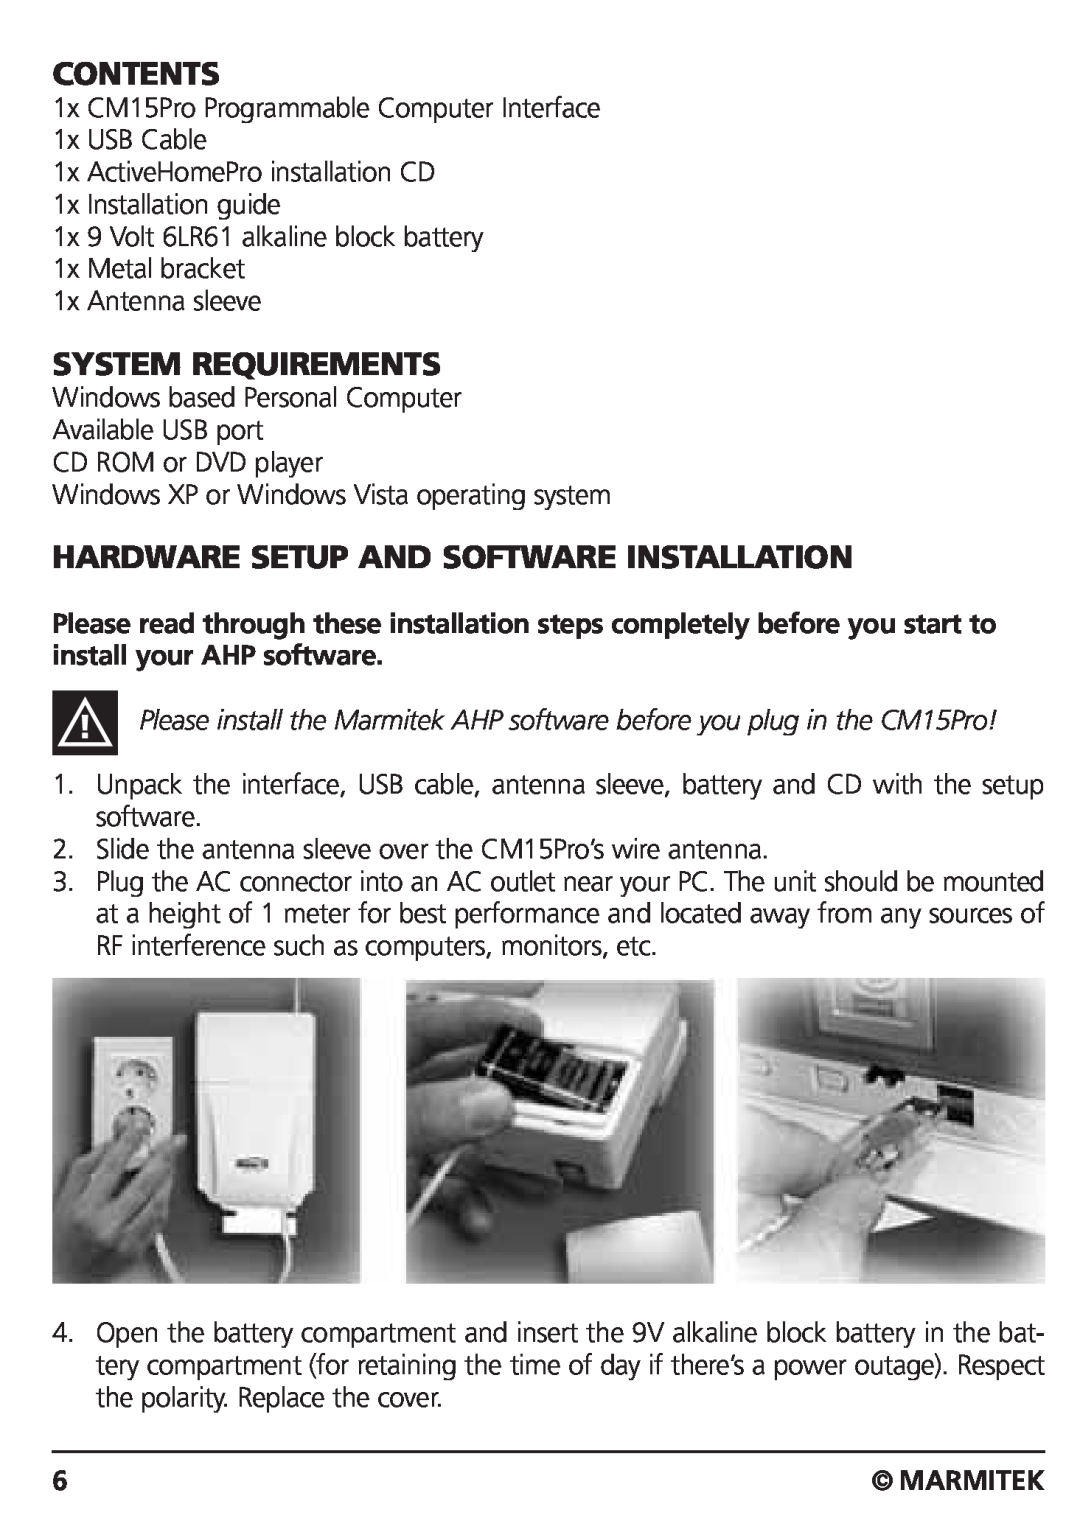 Marmitek CM15PRO manual Contents, System Requirements, Hardware Setup And Software Installation, Marmitek 